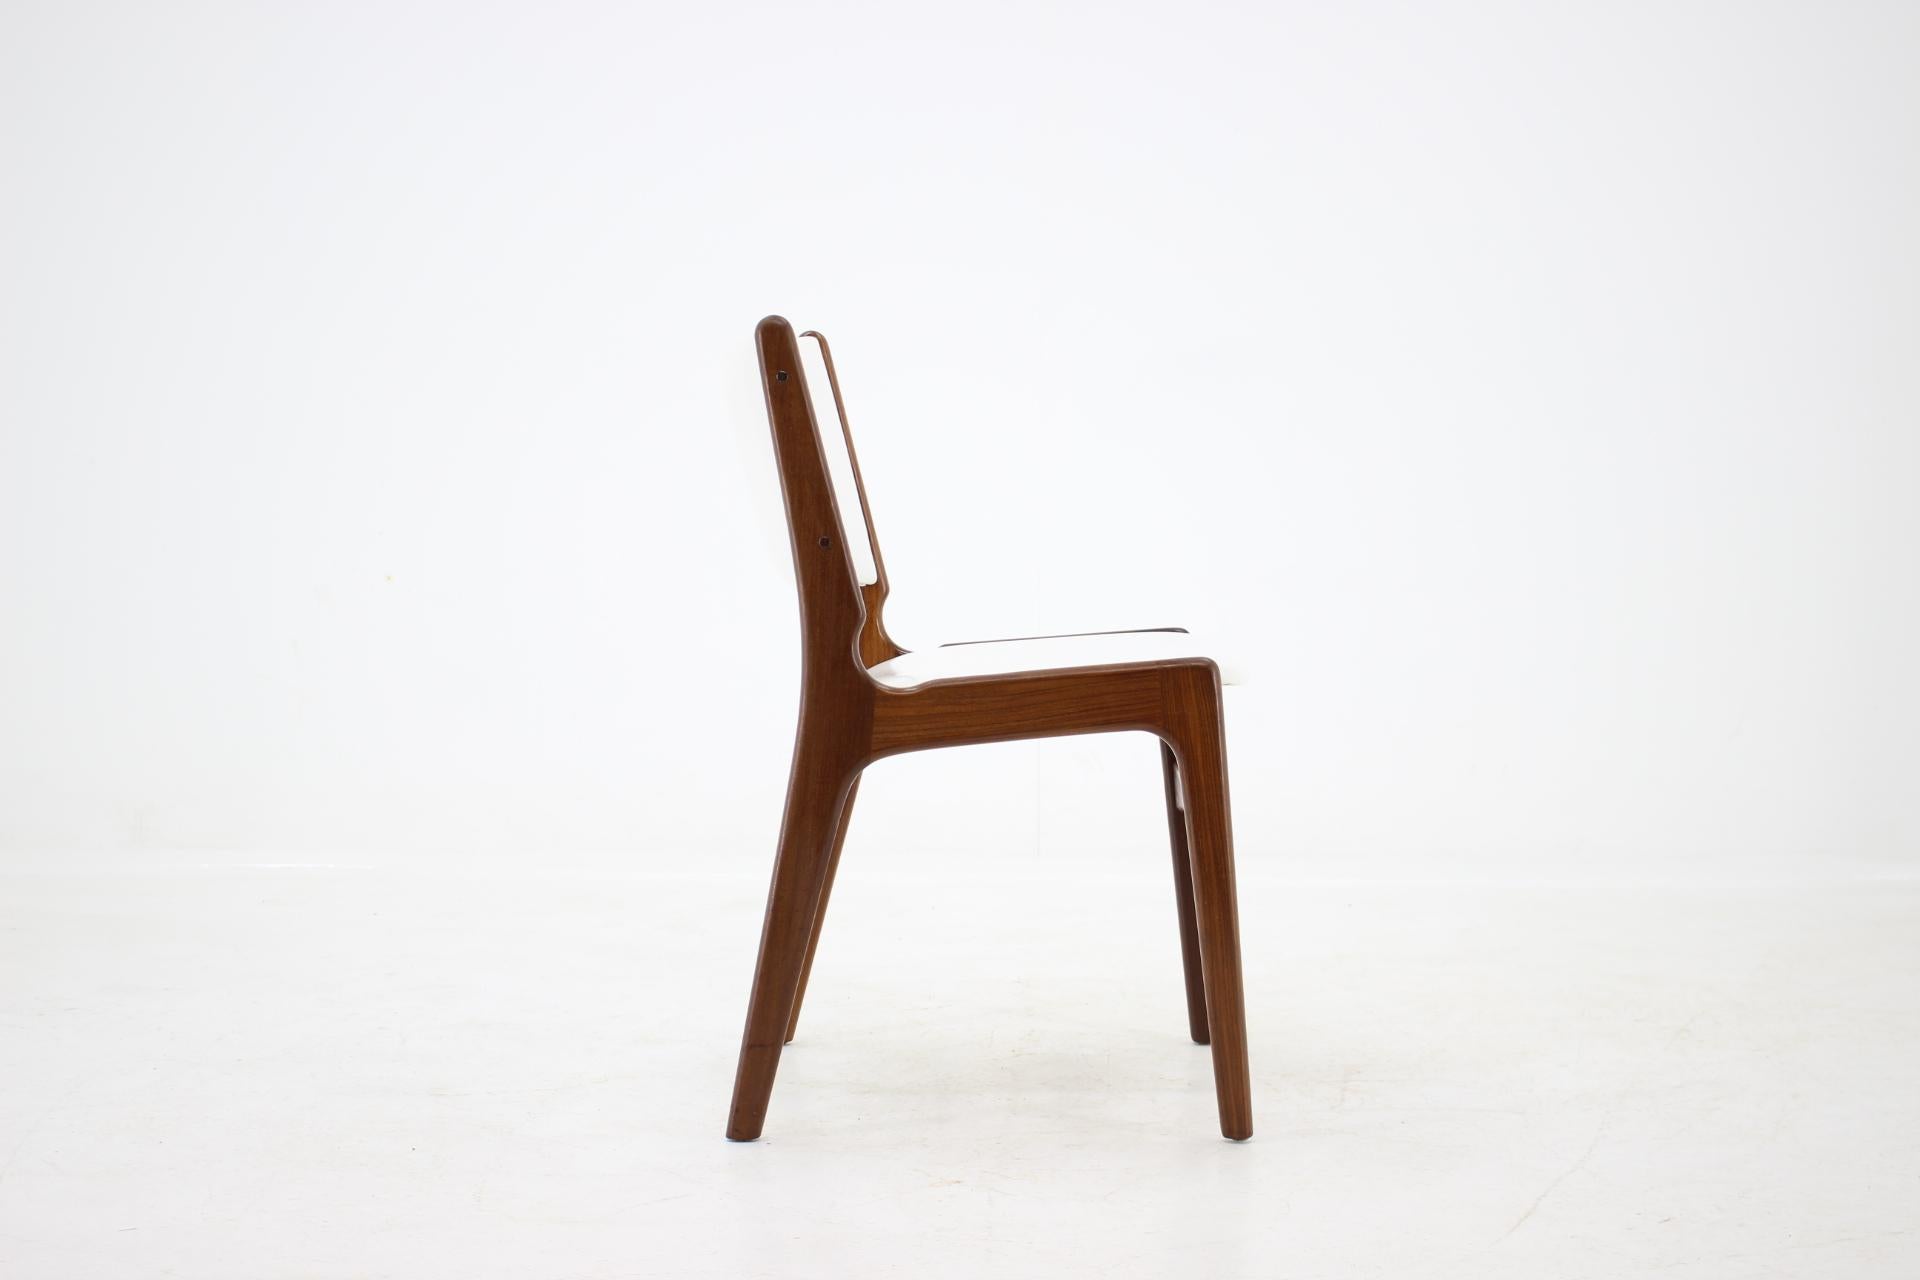 Mid-20th Century 1960s Set of 4 Teak Dining Chairs, Denmark